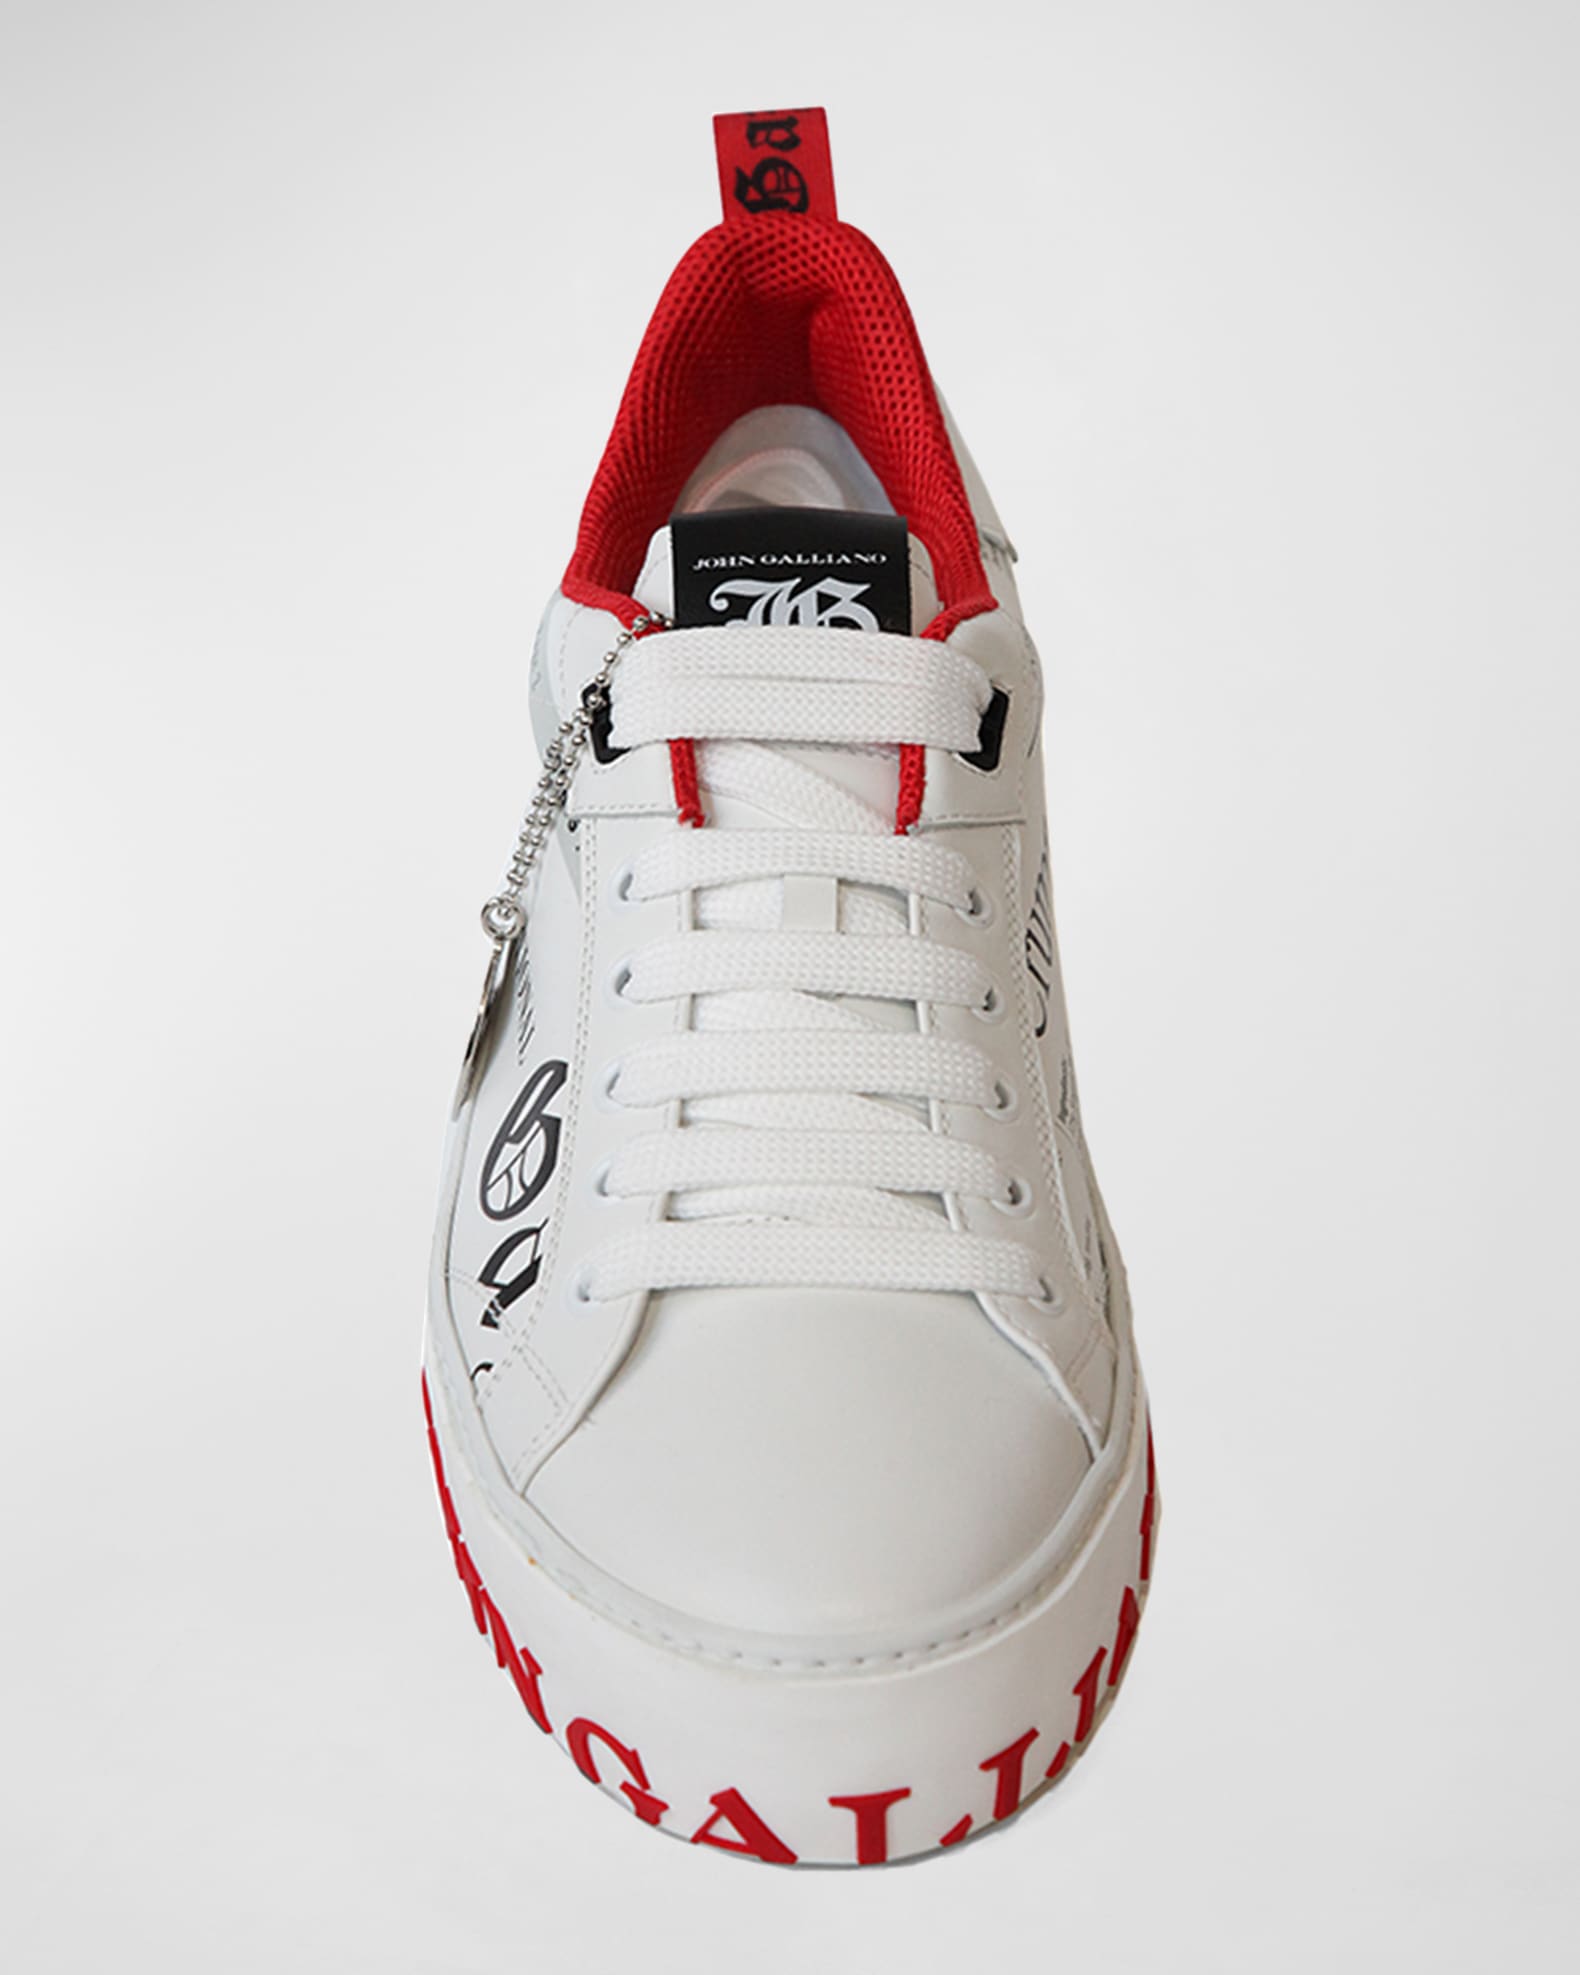  John Galliano Paris Men's YM Textured Sneakers White/Black US  12 EU 45